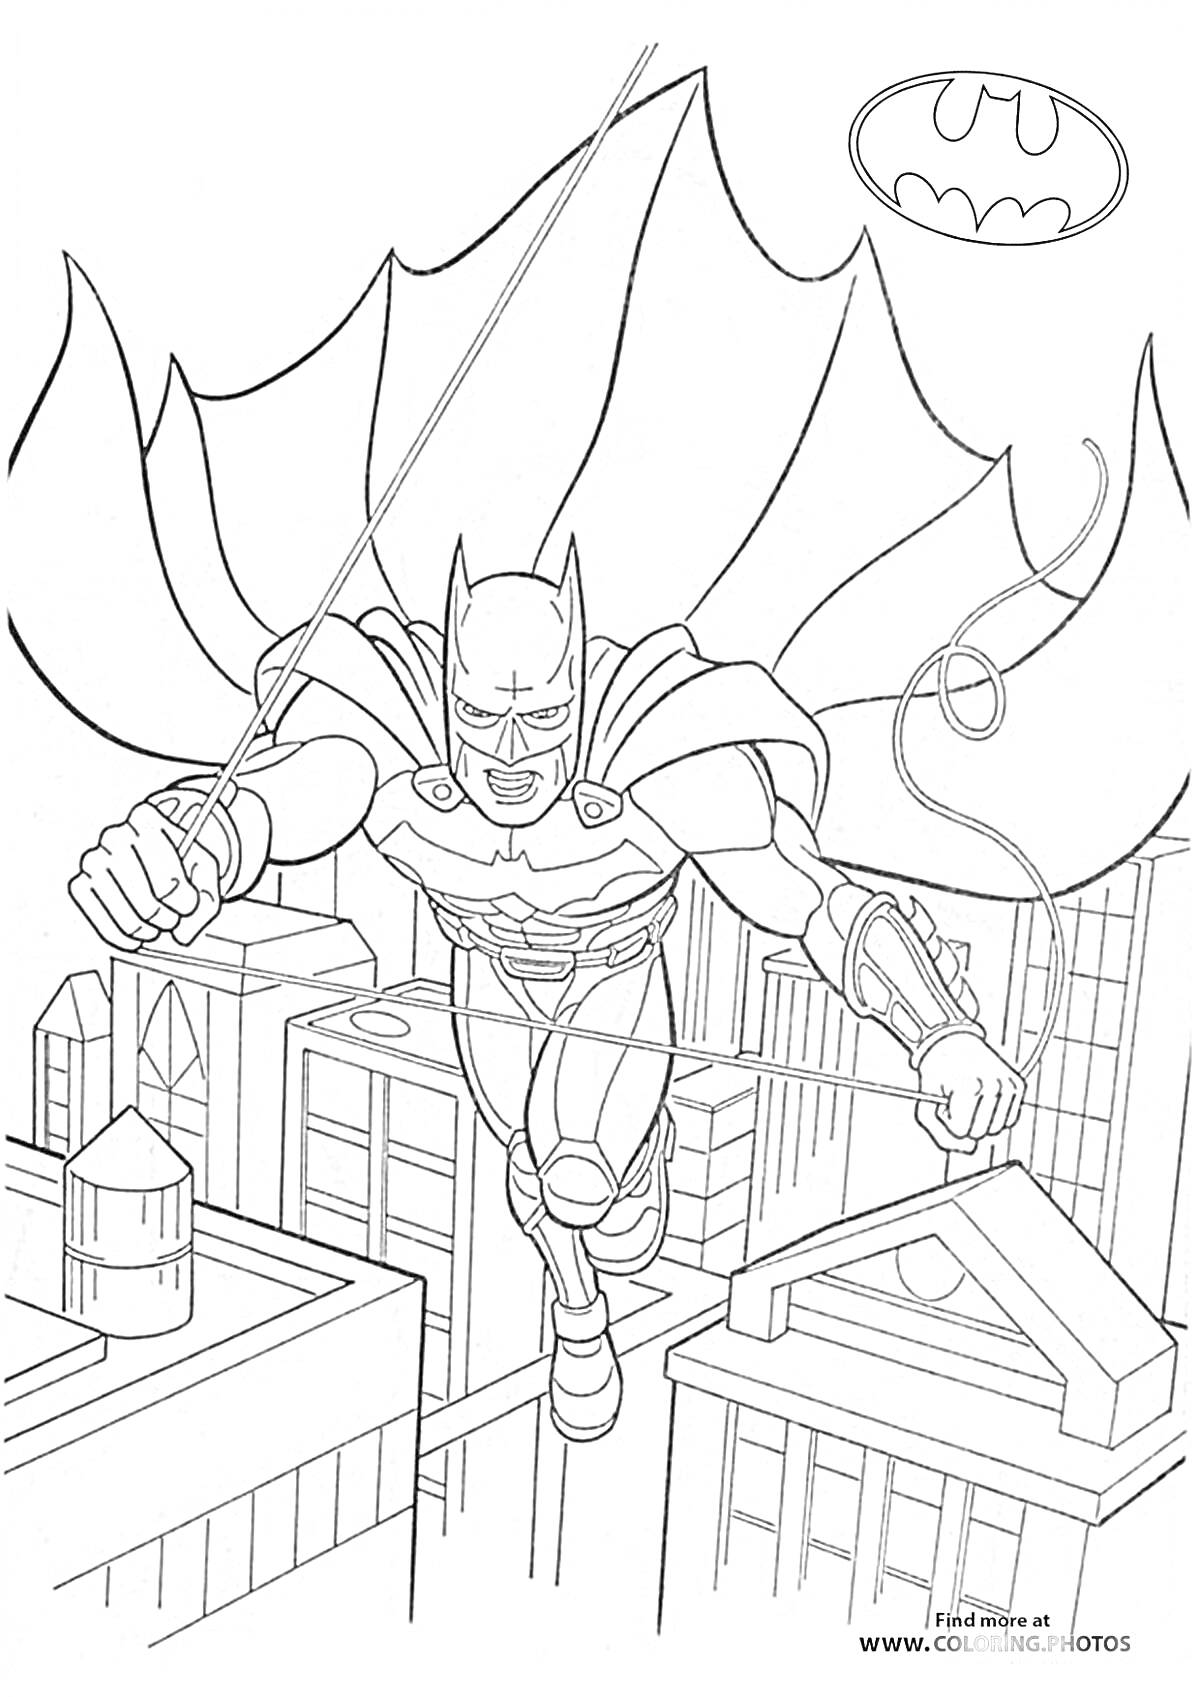 Раскраска Бэтмен летит над городскими зданиями с помощью троса, на заднем плане знак Бэтмена-сигнал на небе